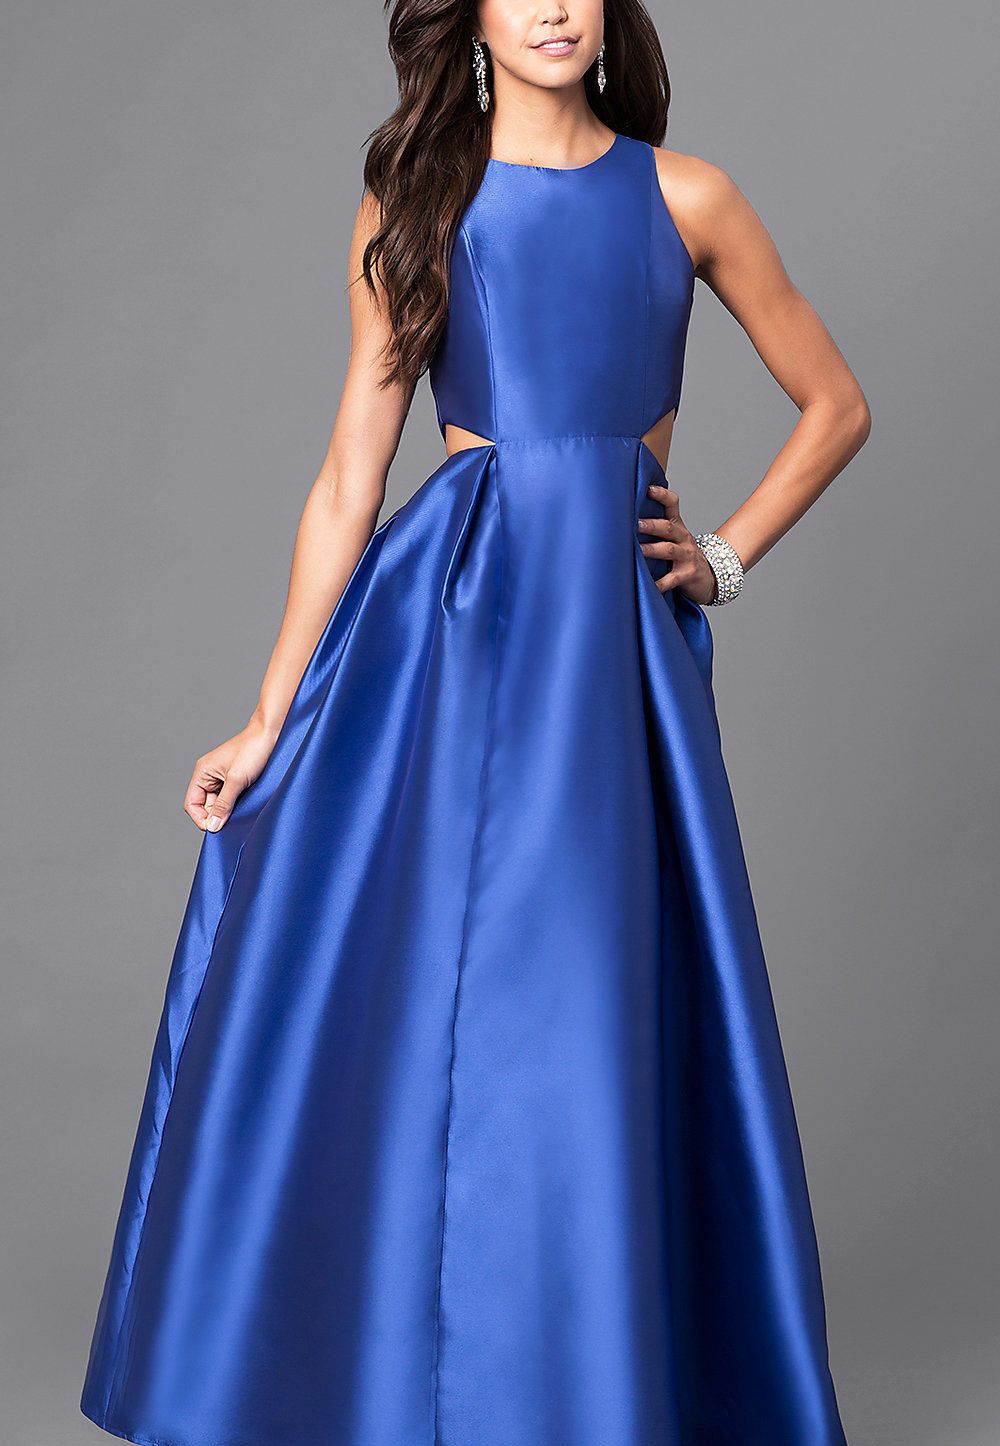 B095 - Cutout Floor Length Dress Size: M